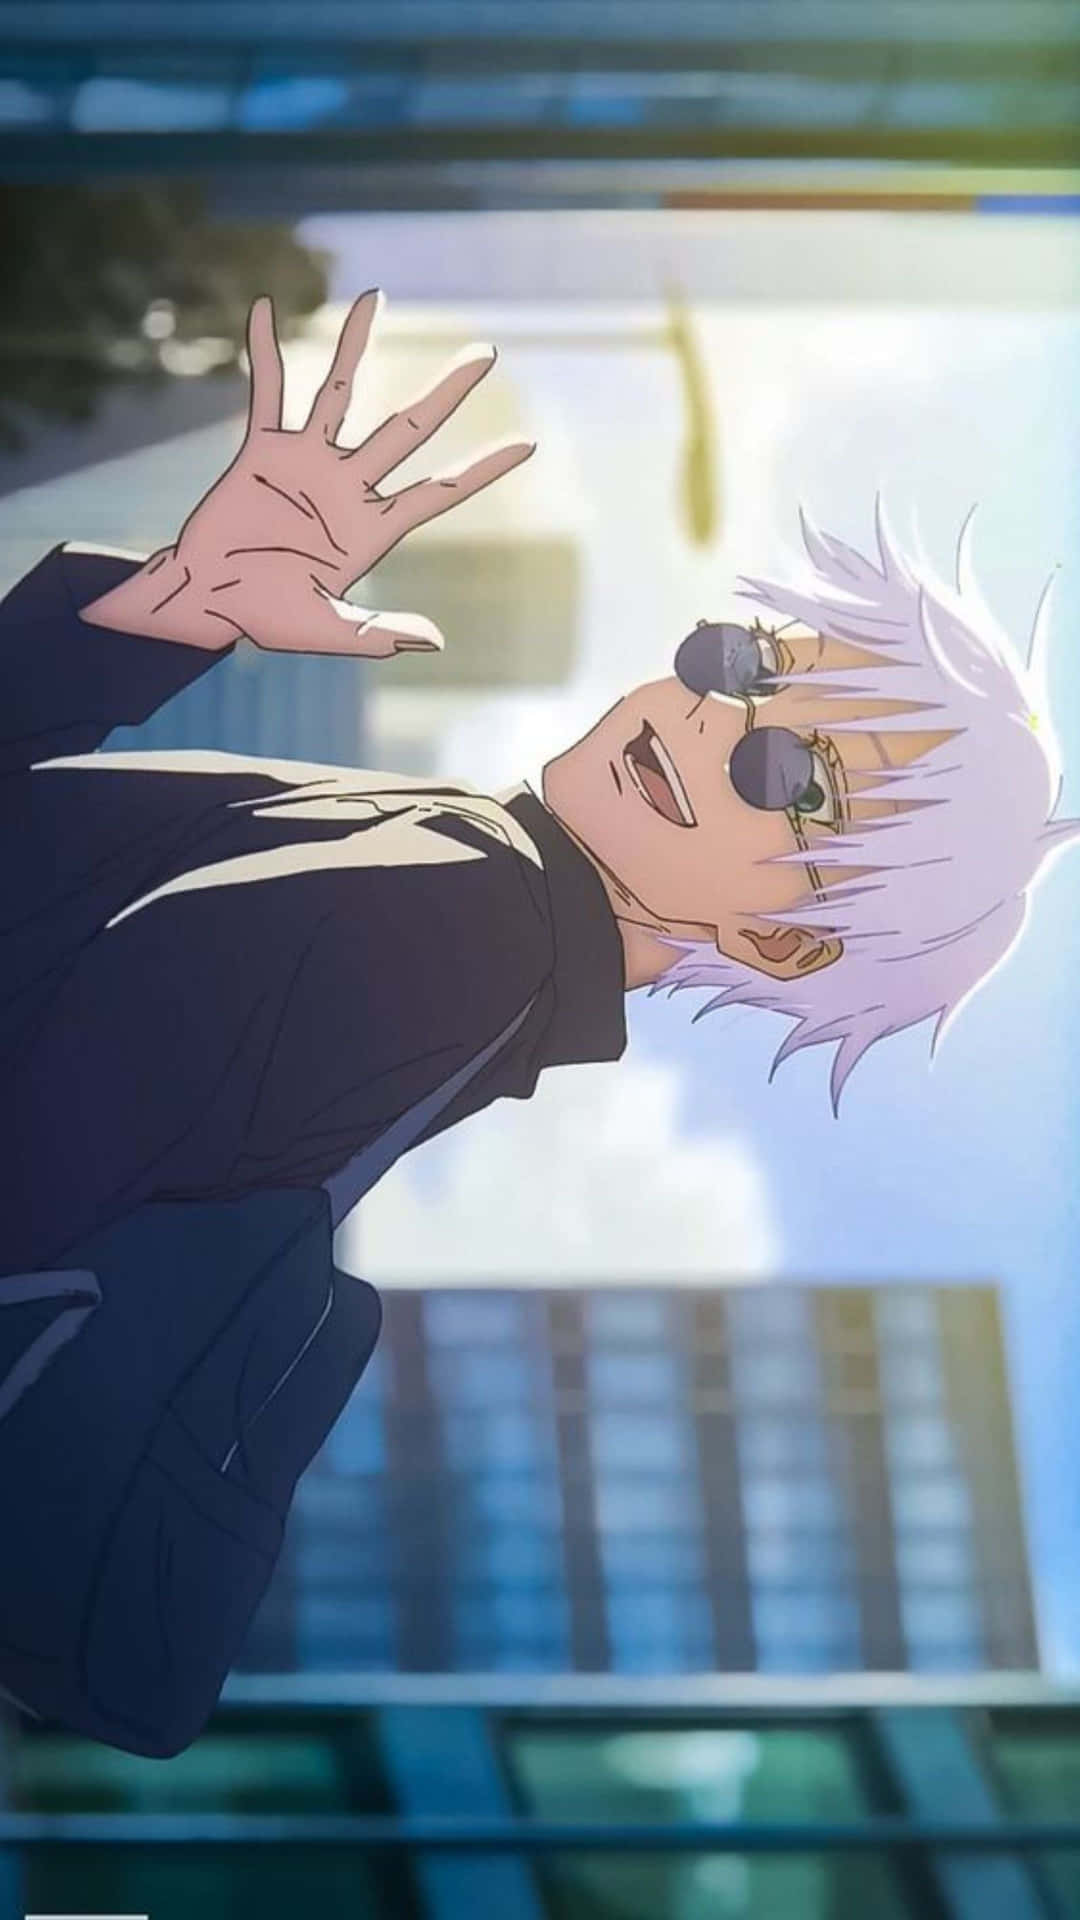 Gojo Sunglasses Funny Expression Anime Wallpaper